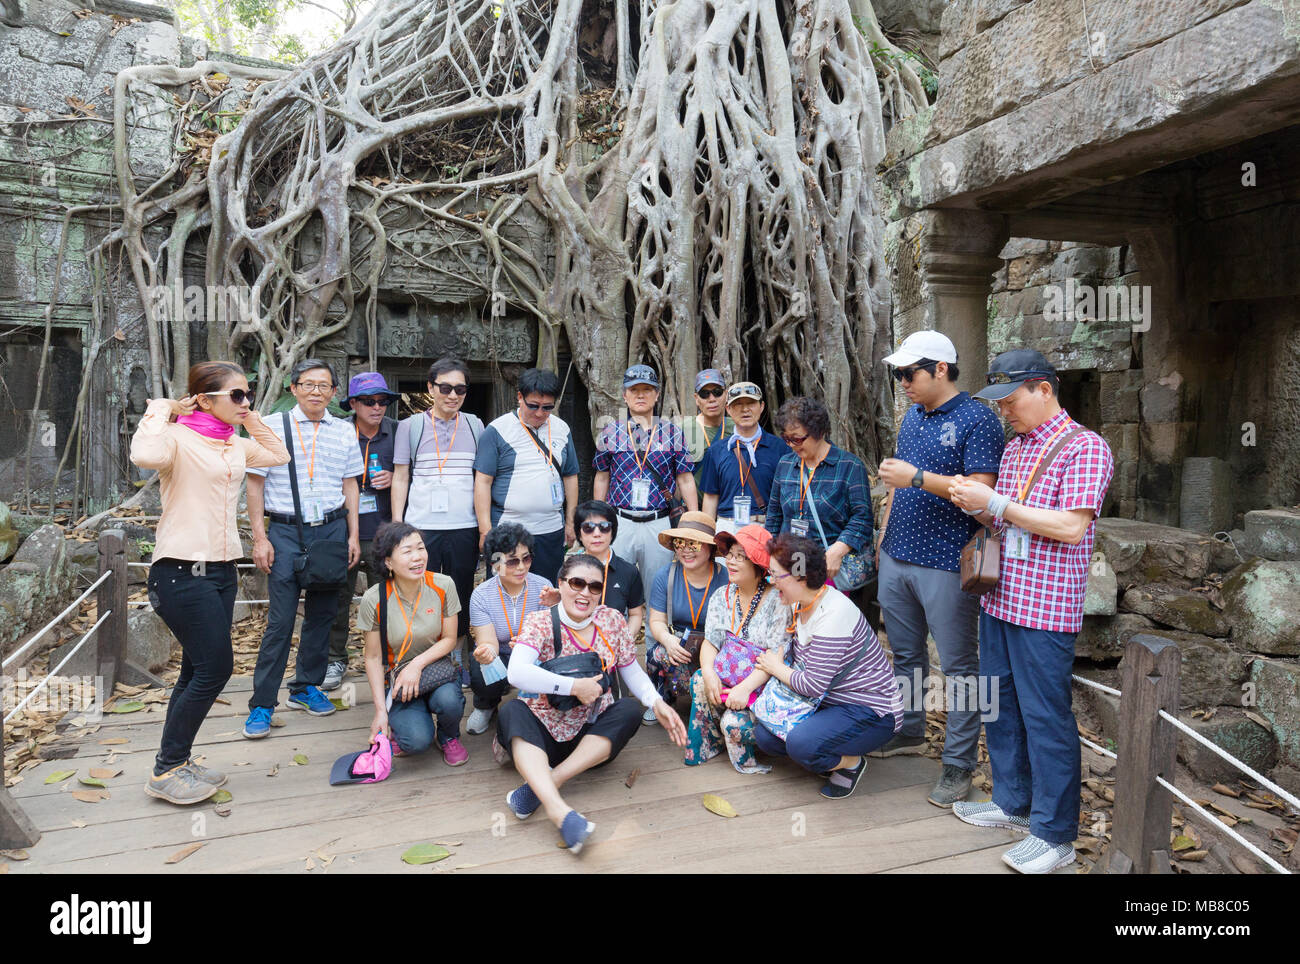 Chinesische Reisegruppe - chinesische Touristen im Urlaub bei Ta Prohm Tempel, Angkor, Kambodscha Asien Stockfoto